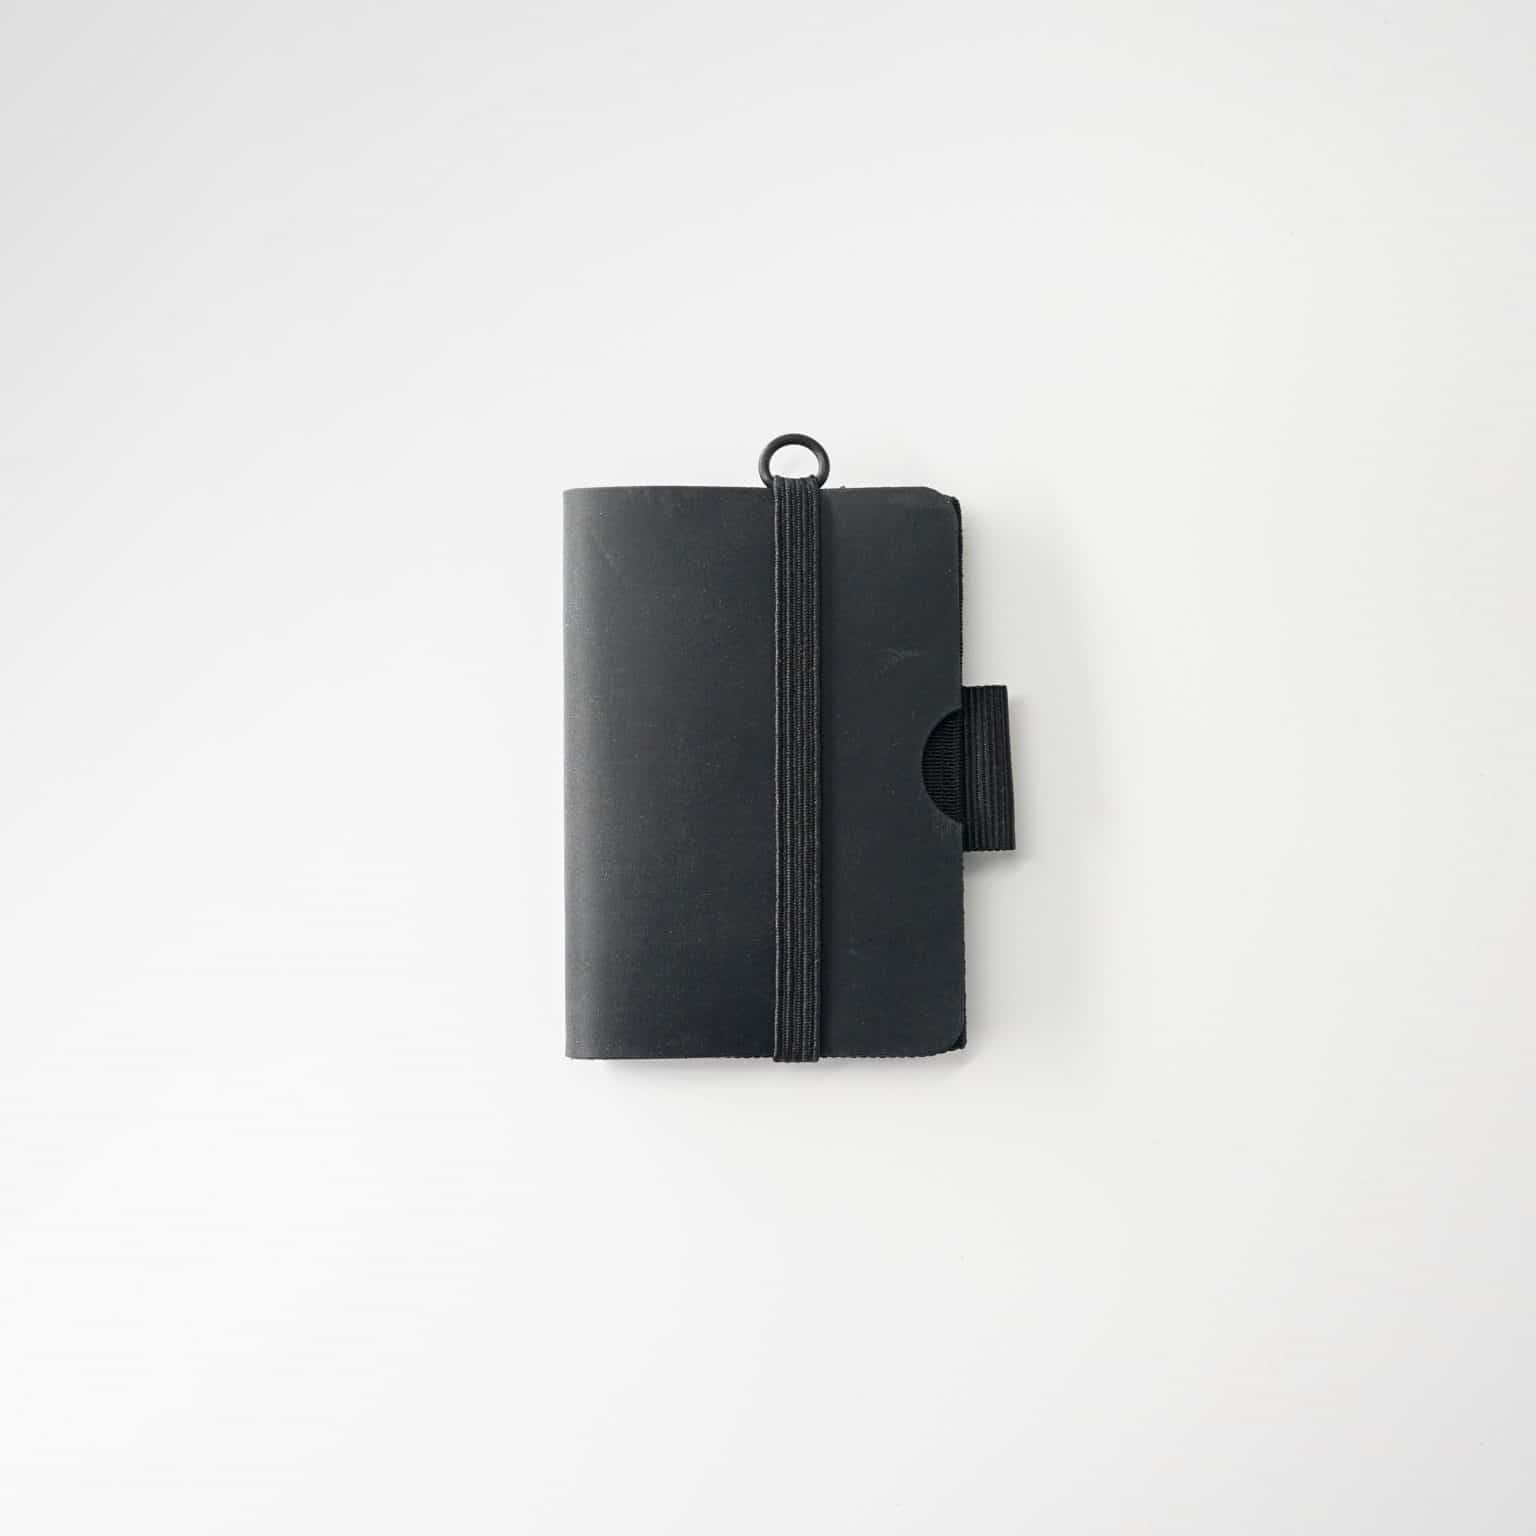 Slim front pocket wallet with elegant leather texture.